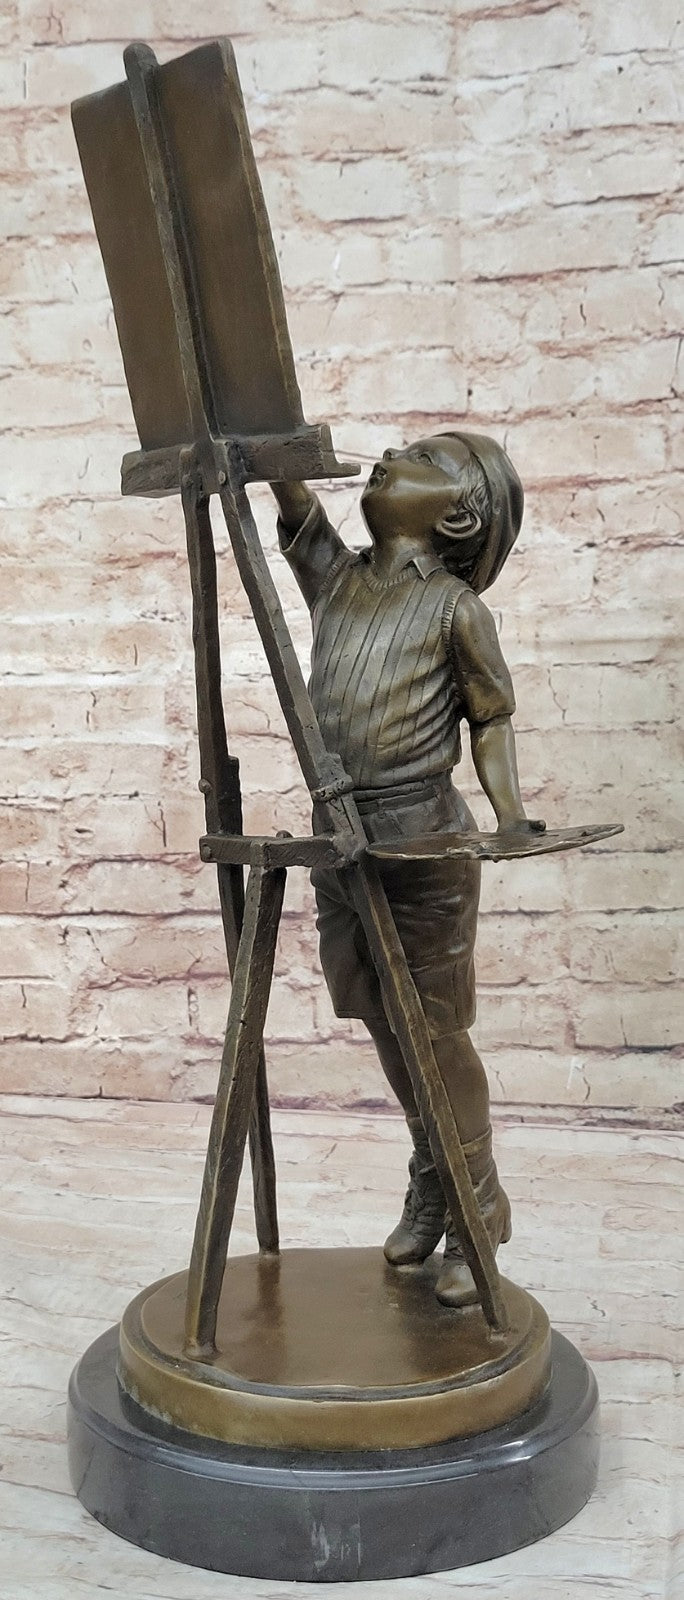 Unique Lost Wax Method Prodigy Boy Painting Art Bronze Sculpture Figurine